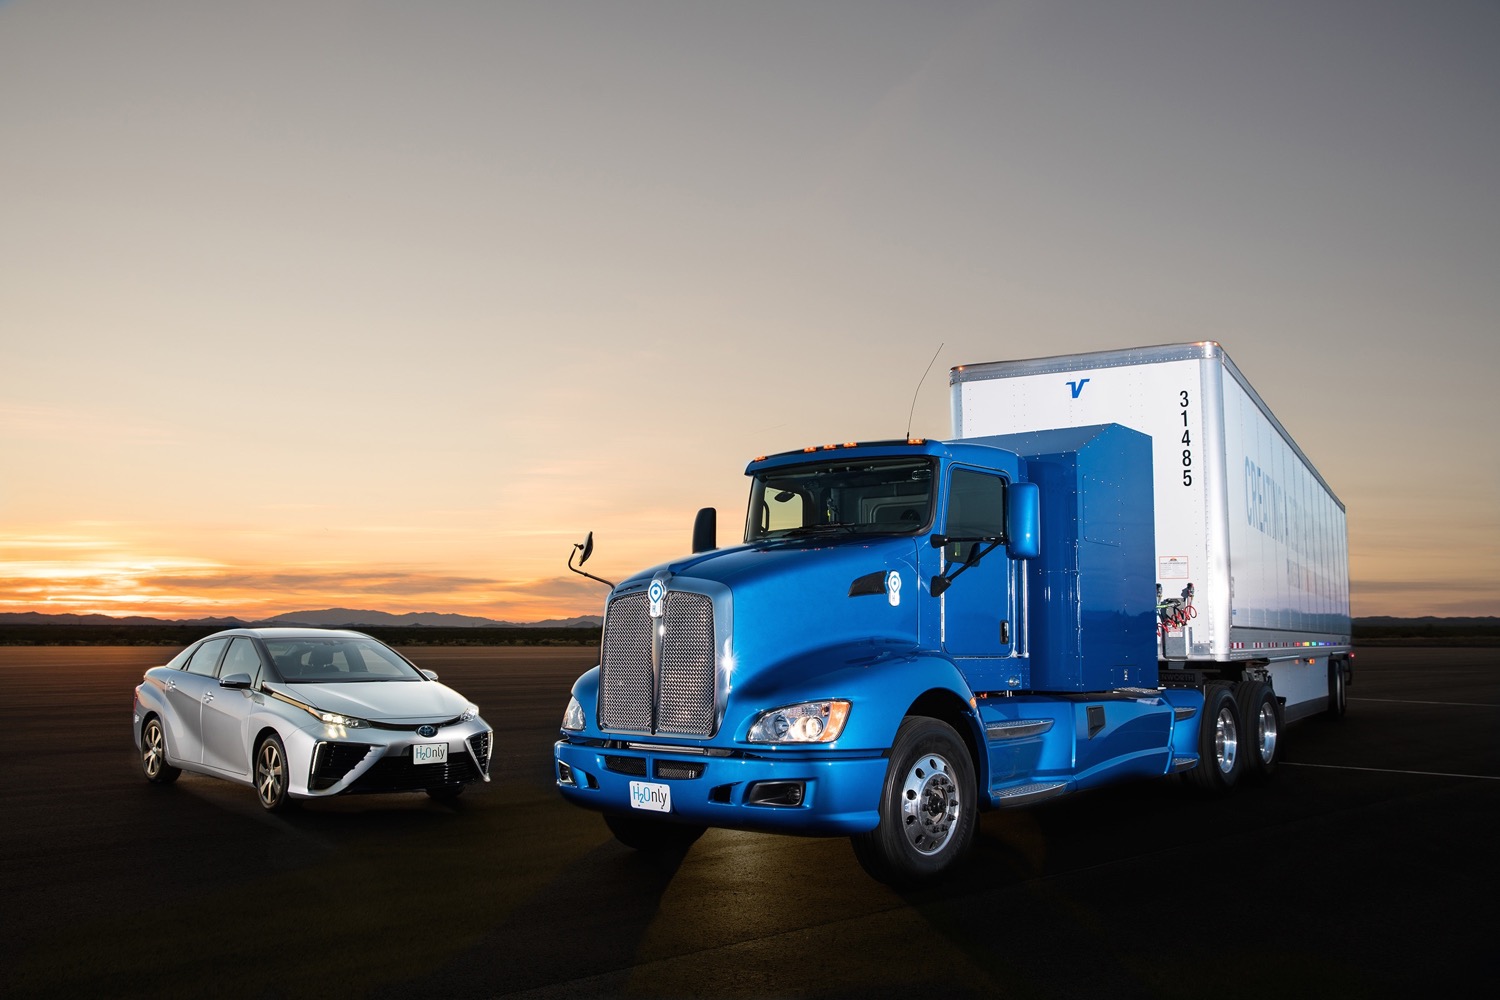 Toyota Project Portal hydrogen fuel-cell truck